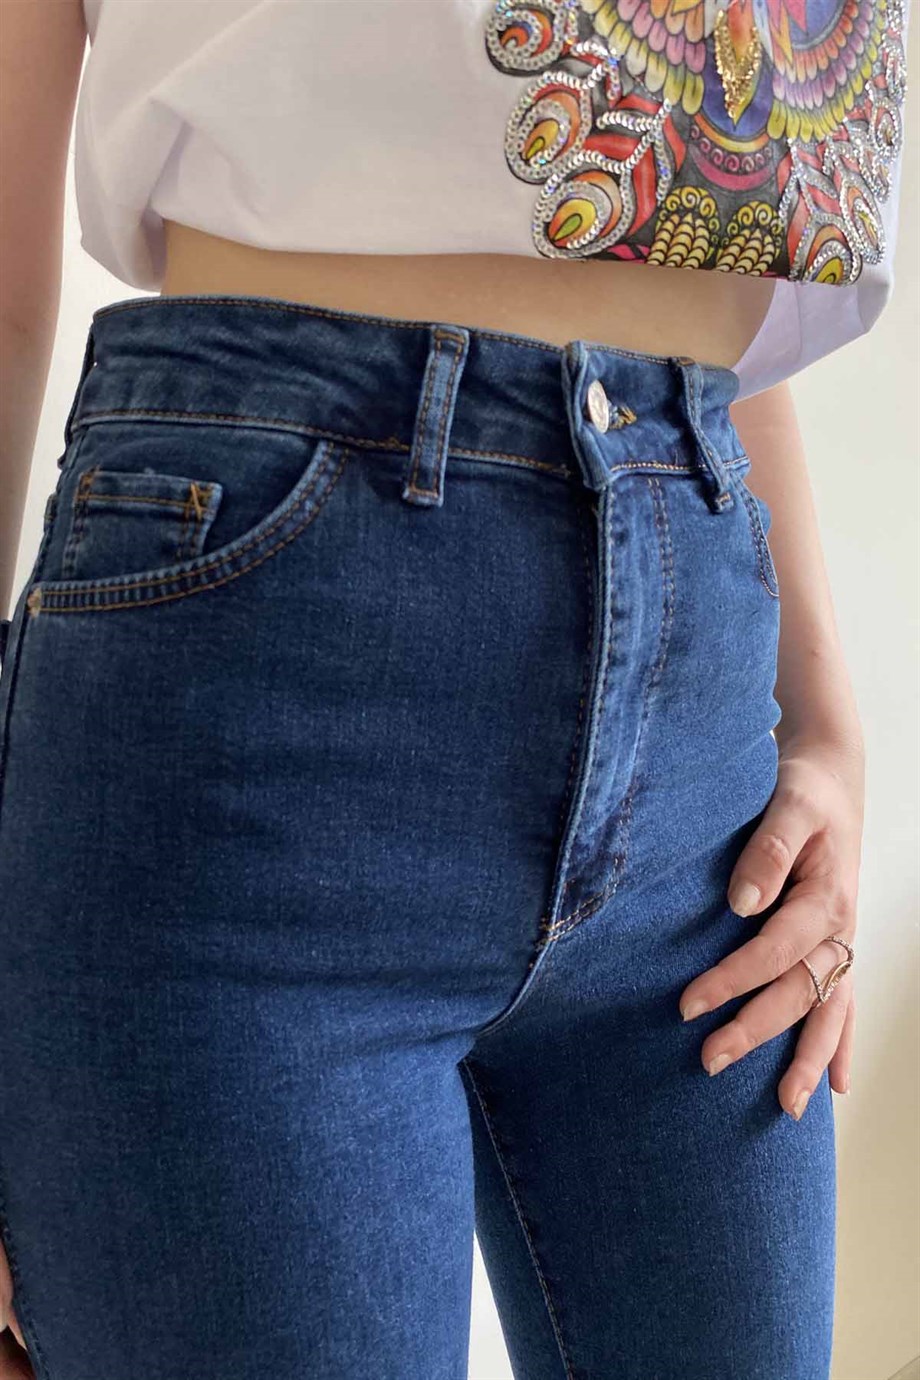 Zara Model Yüksek Bel Sihirli Jean ( Bıyıklı )